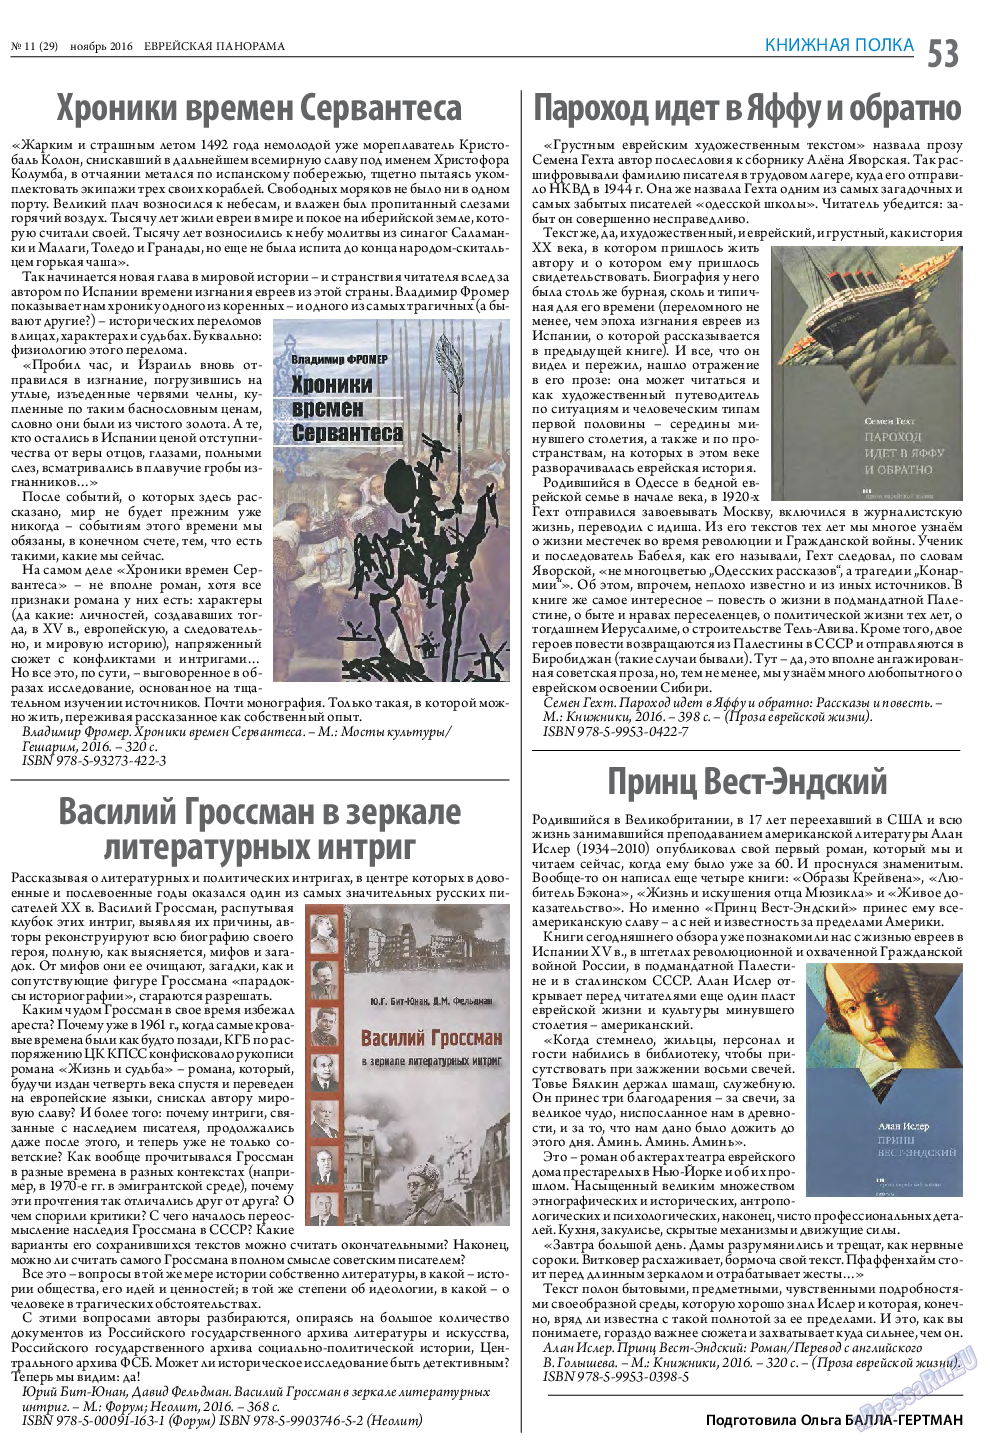 Еврейская панорама, газета. 2016 №11 стр.53